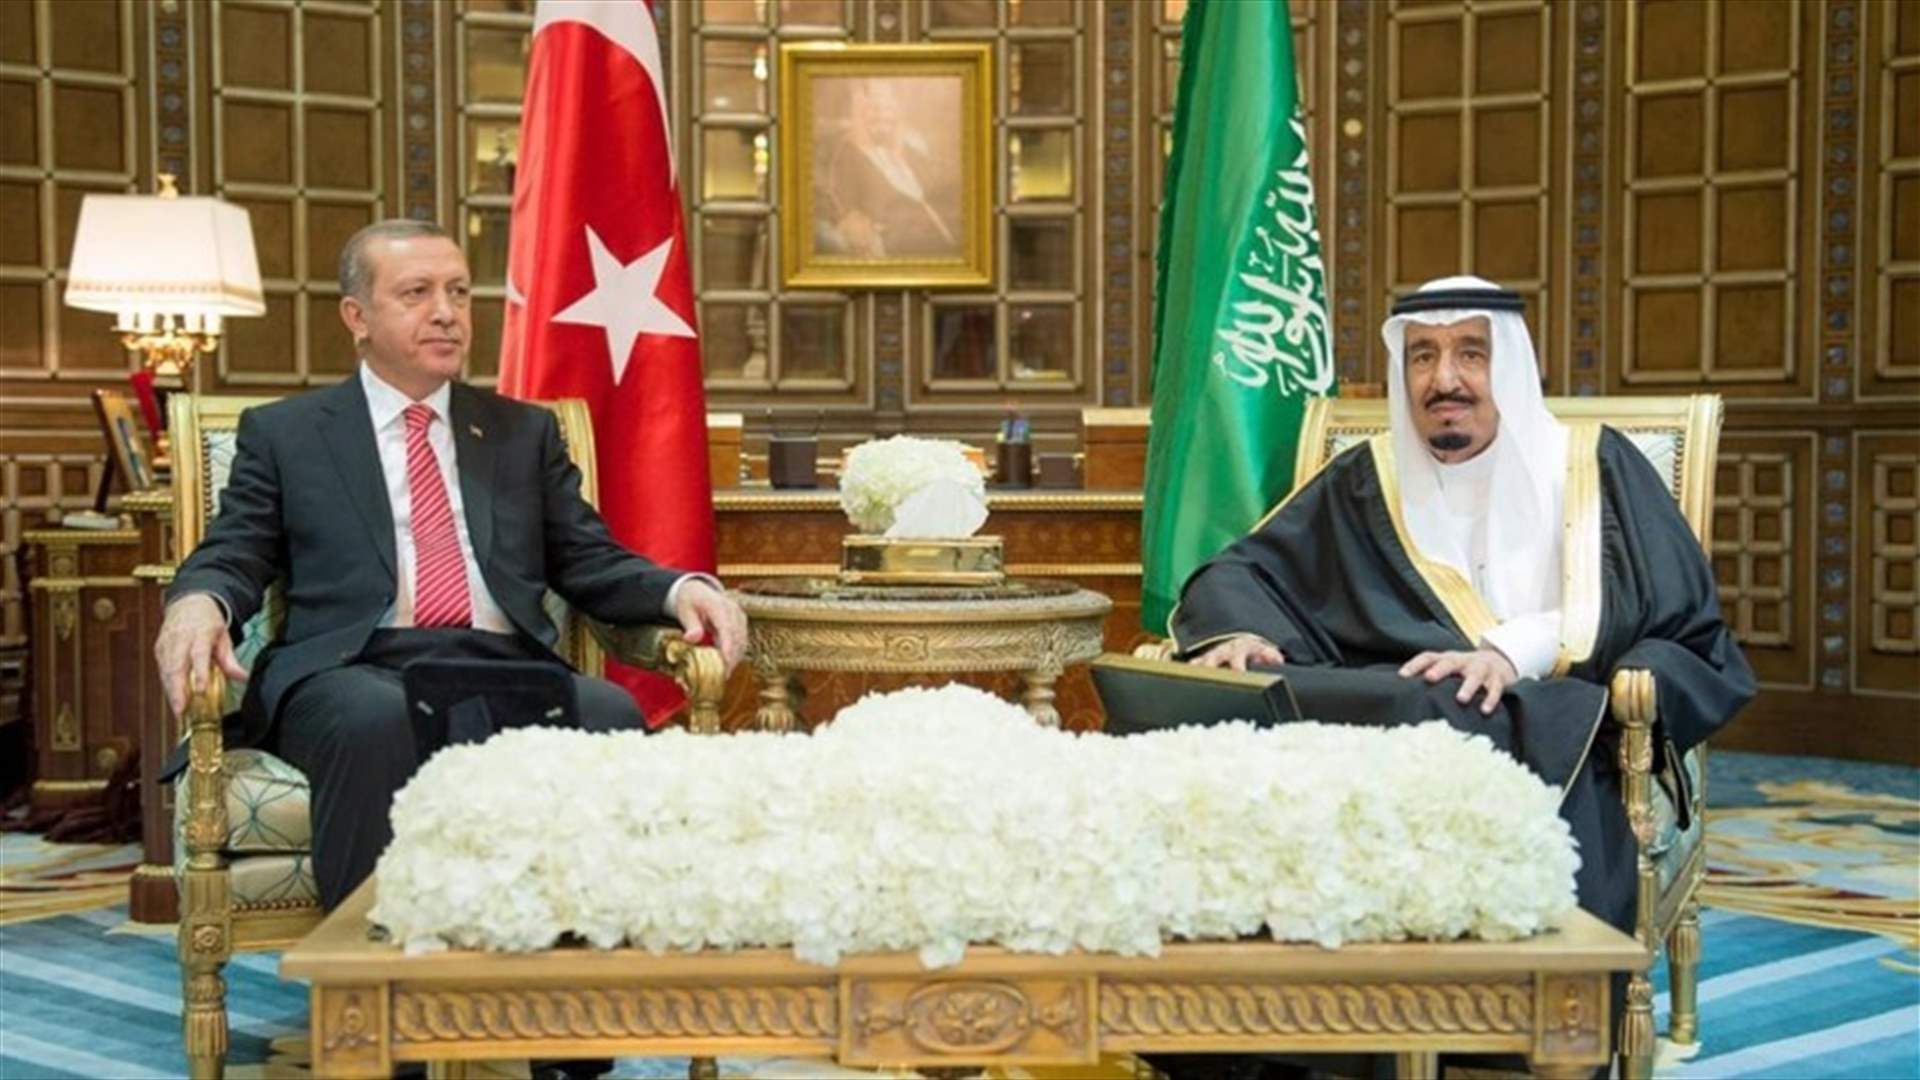 Saudi King Salman arrives in Turkey for visit ahead of OIC summit